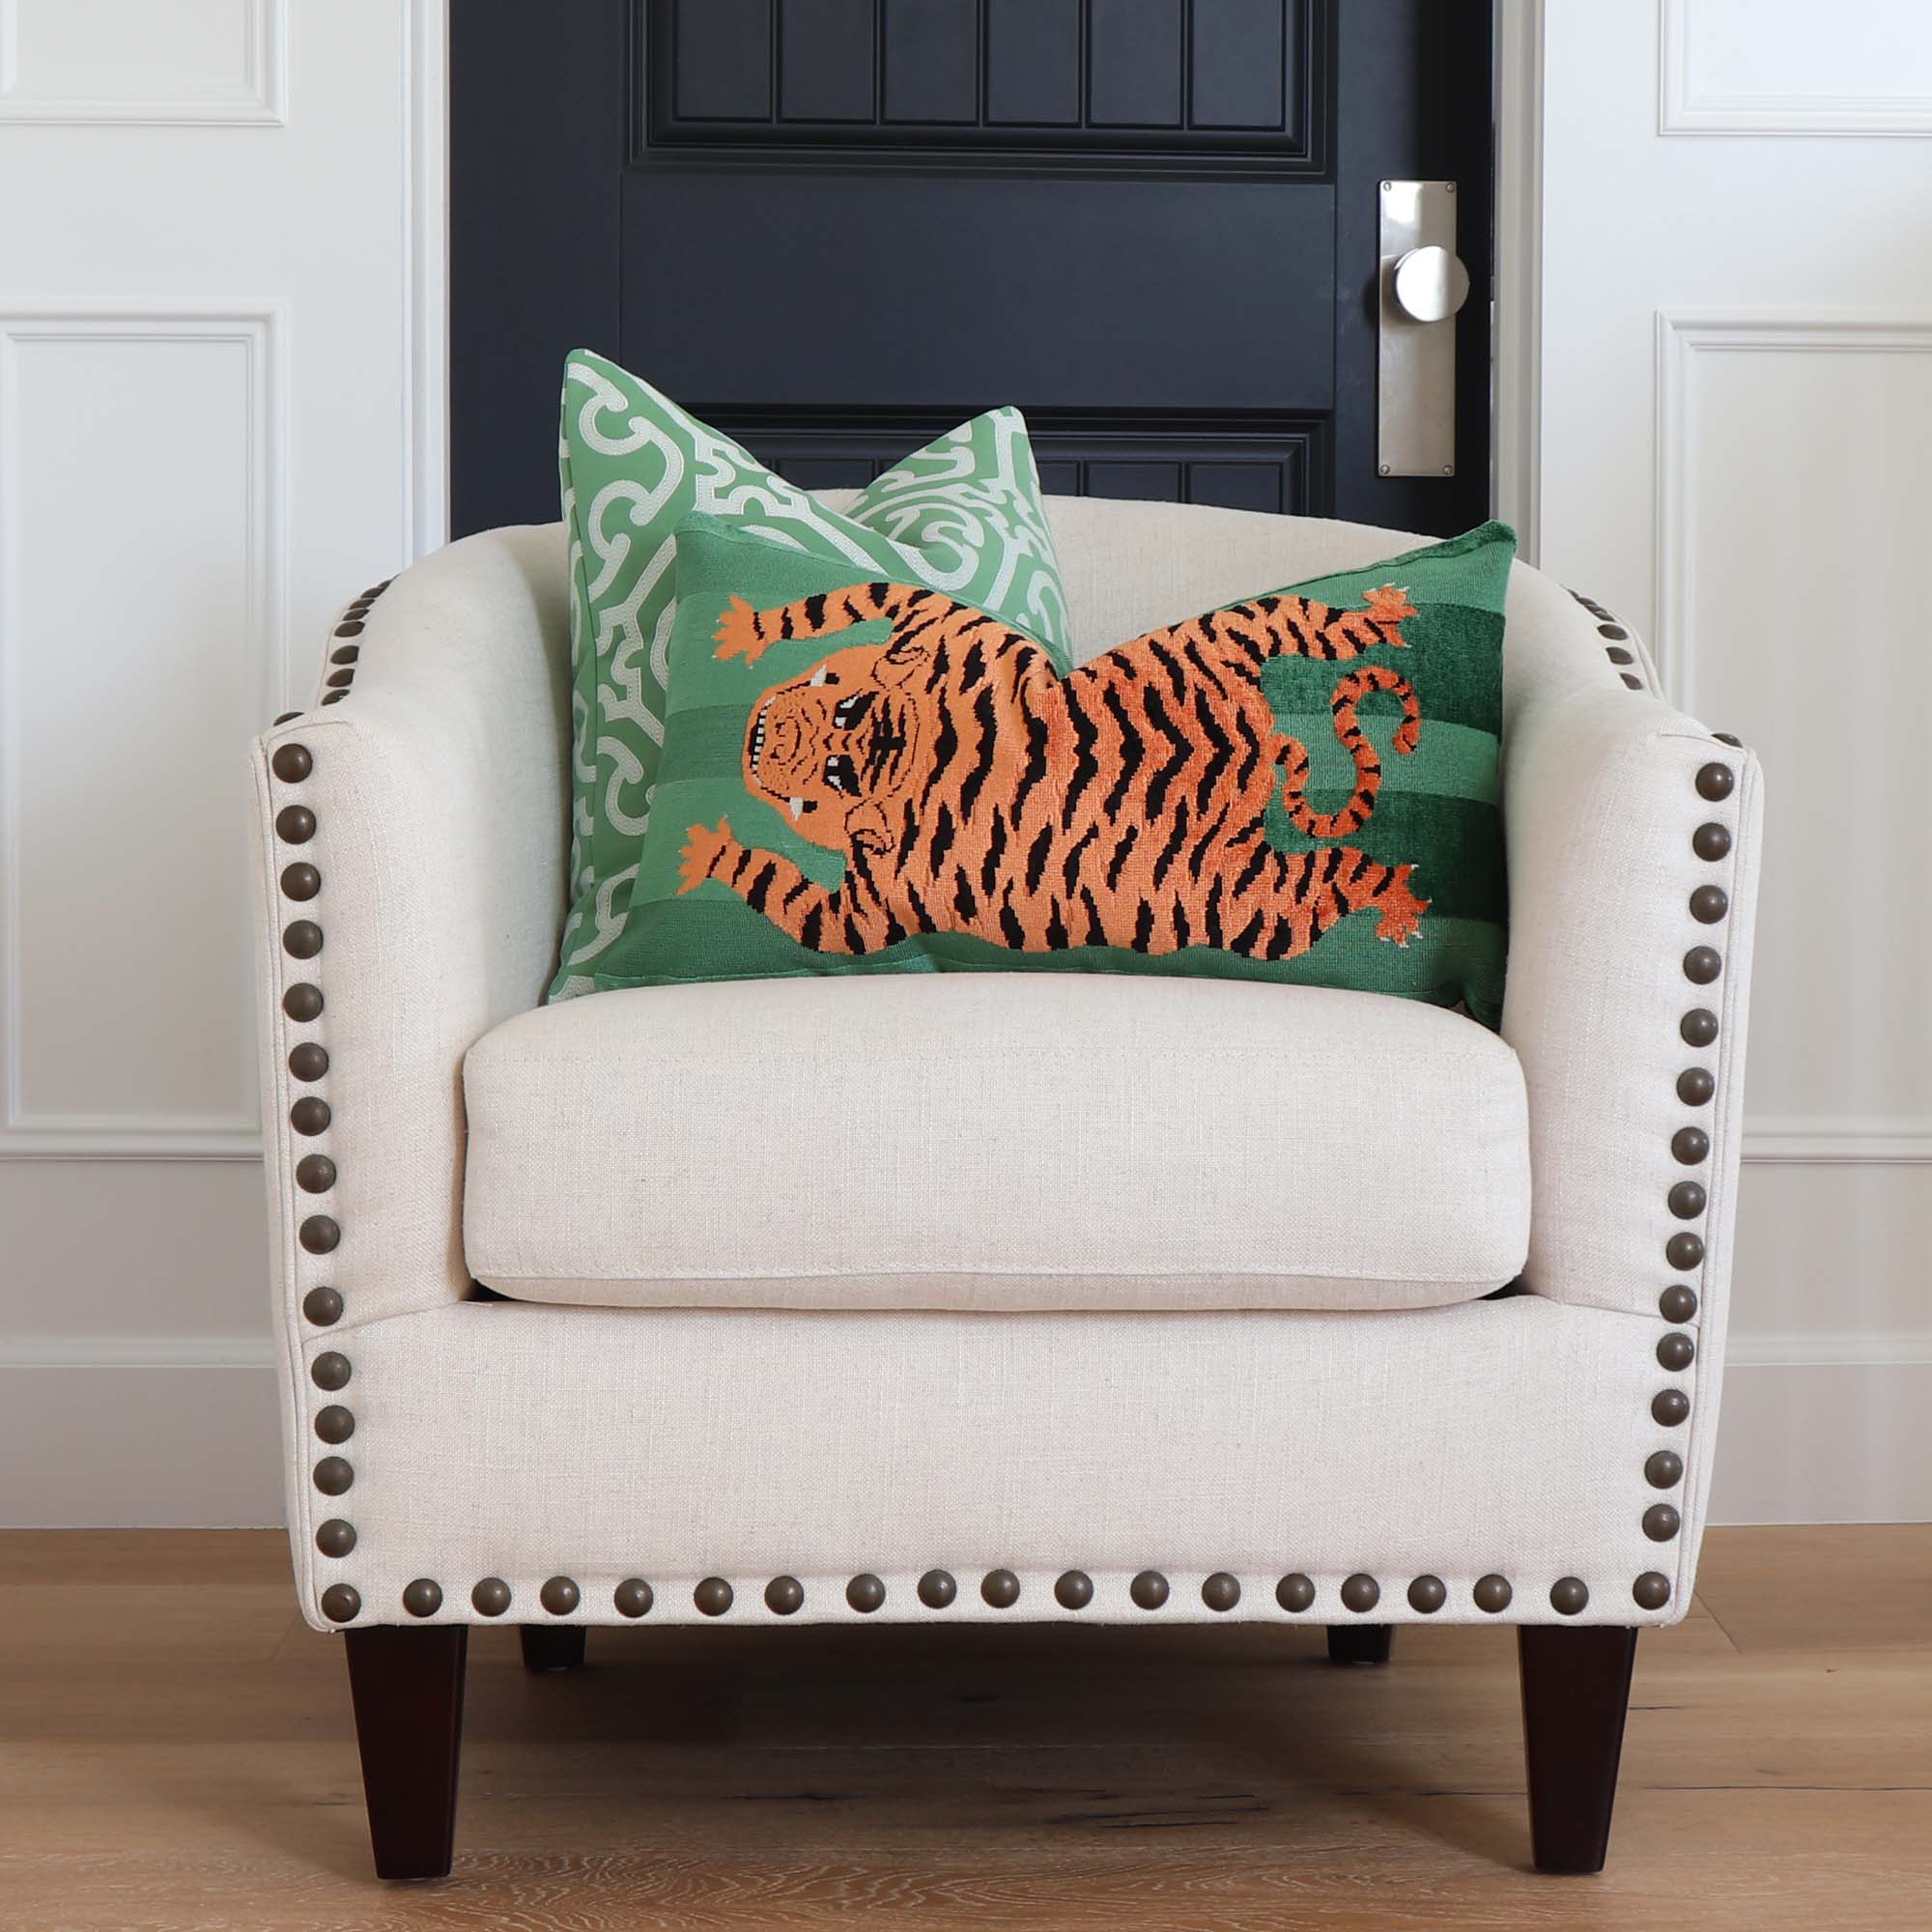 Schumacher Jokhang Tiger Velvet Green Luxury Designer Throw Pillow Cover on Accent Chair in Home